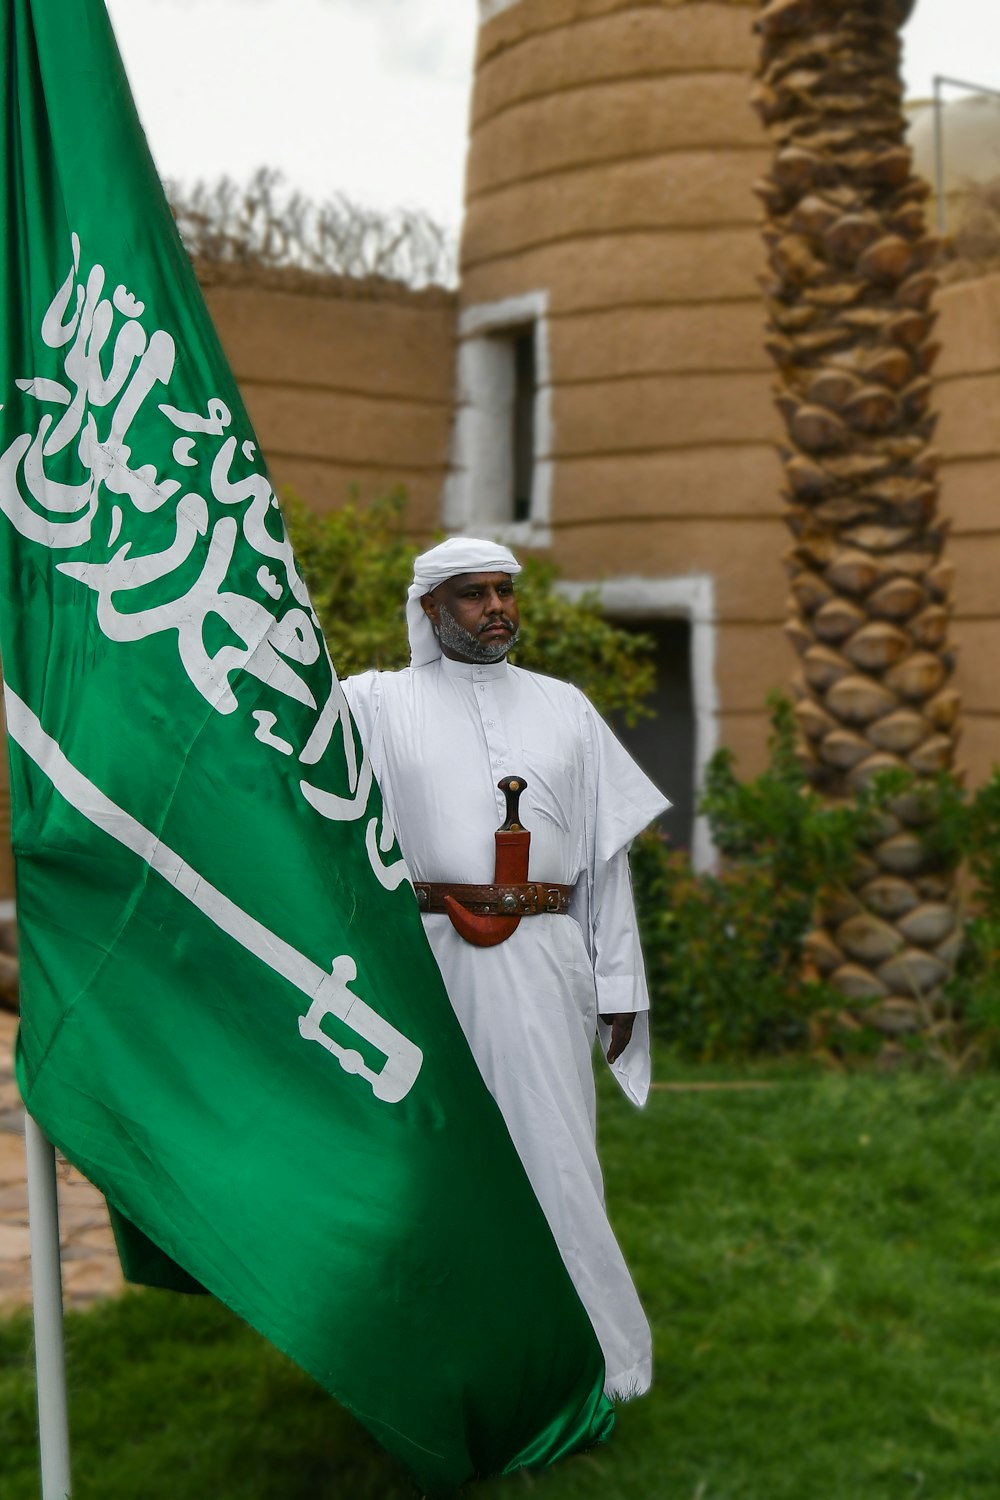 a man standing next to a green flag